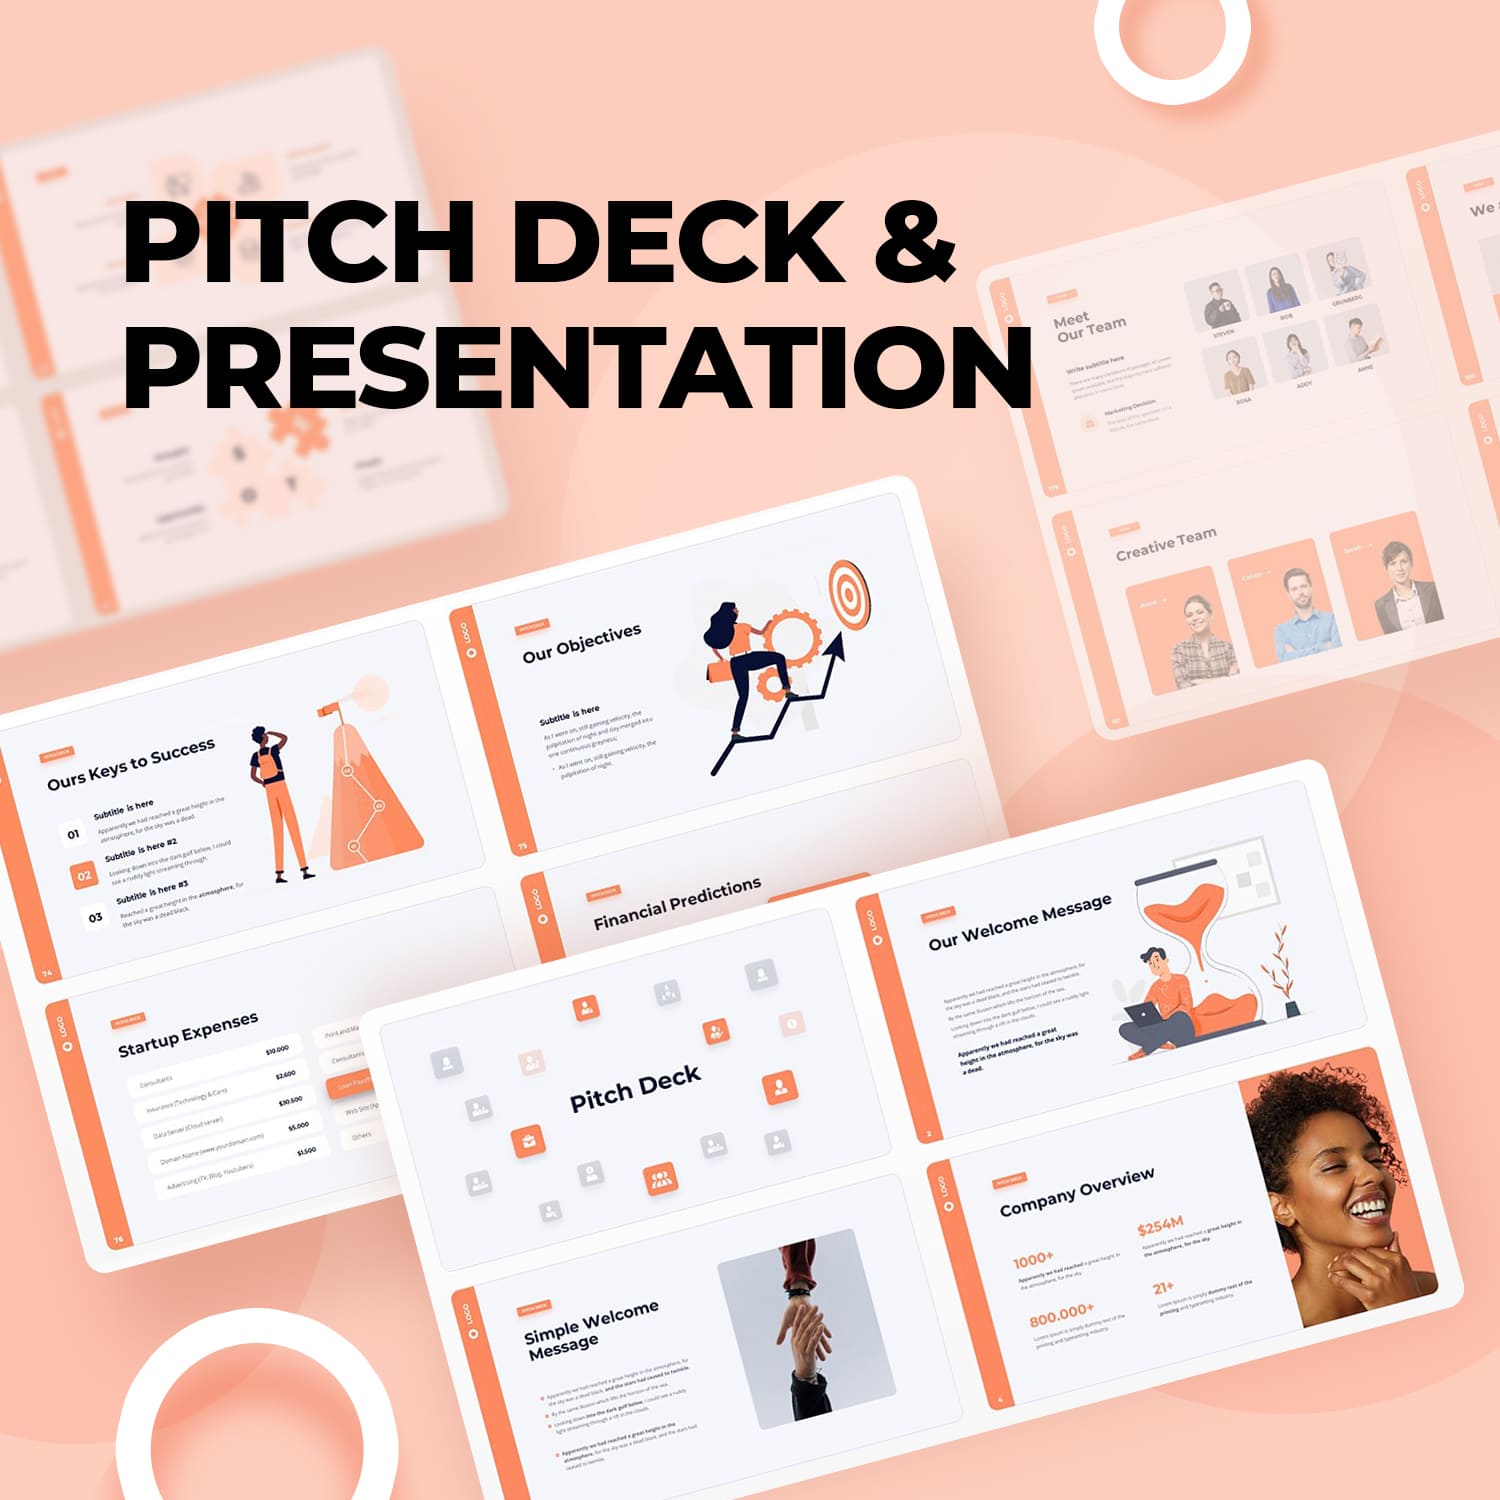 Pitch Deck & Presentation V3.0 by MasterBundles.